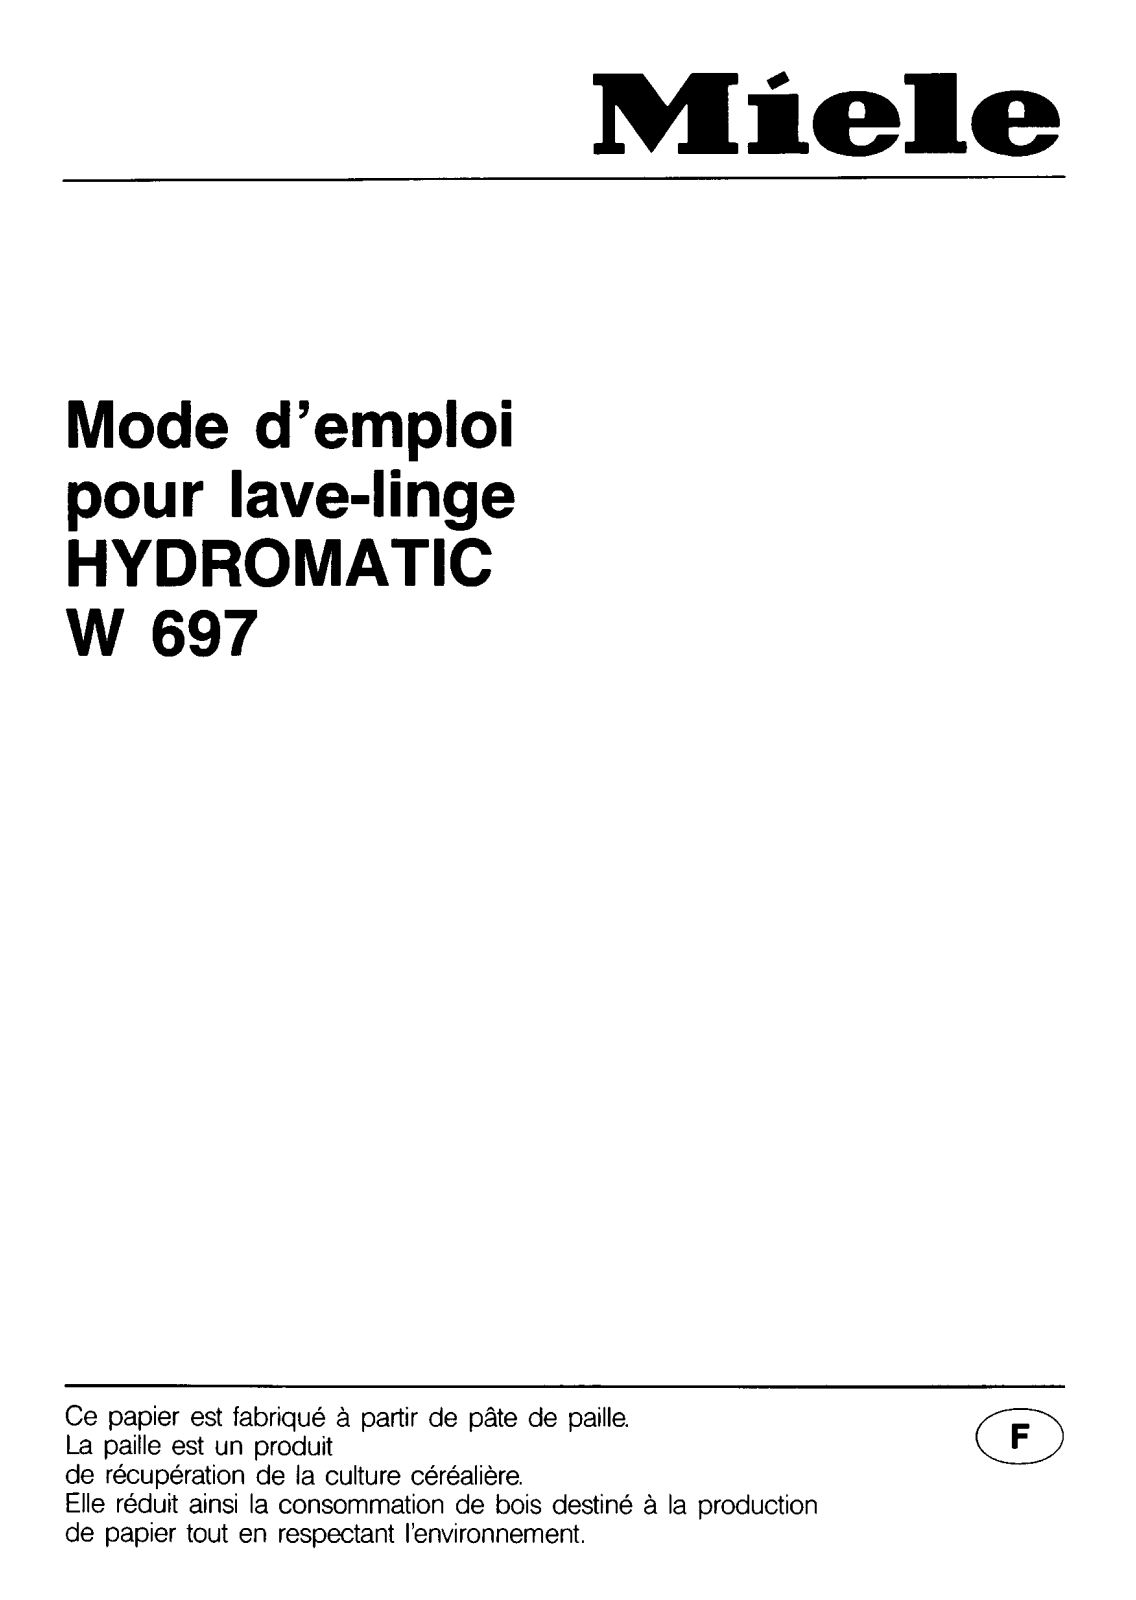 MIELE HYDROMATIC W 697 User Manual